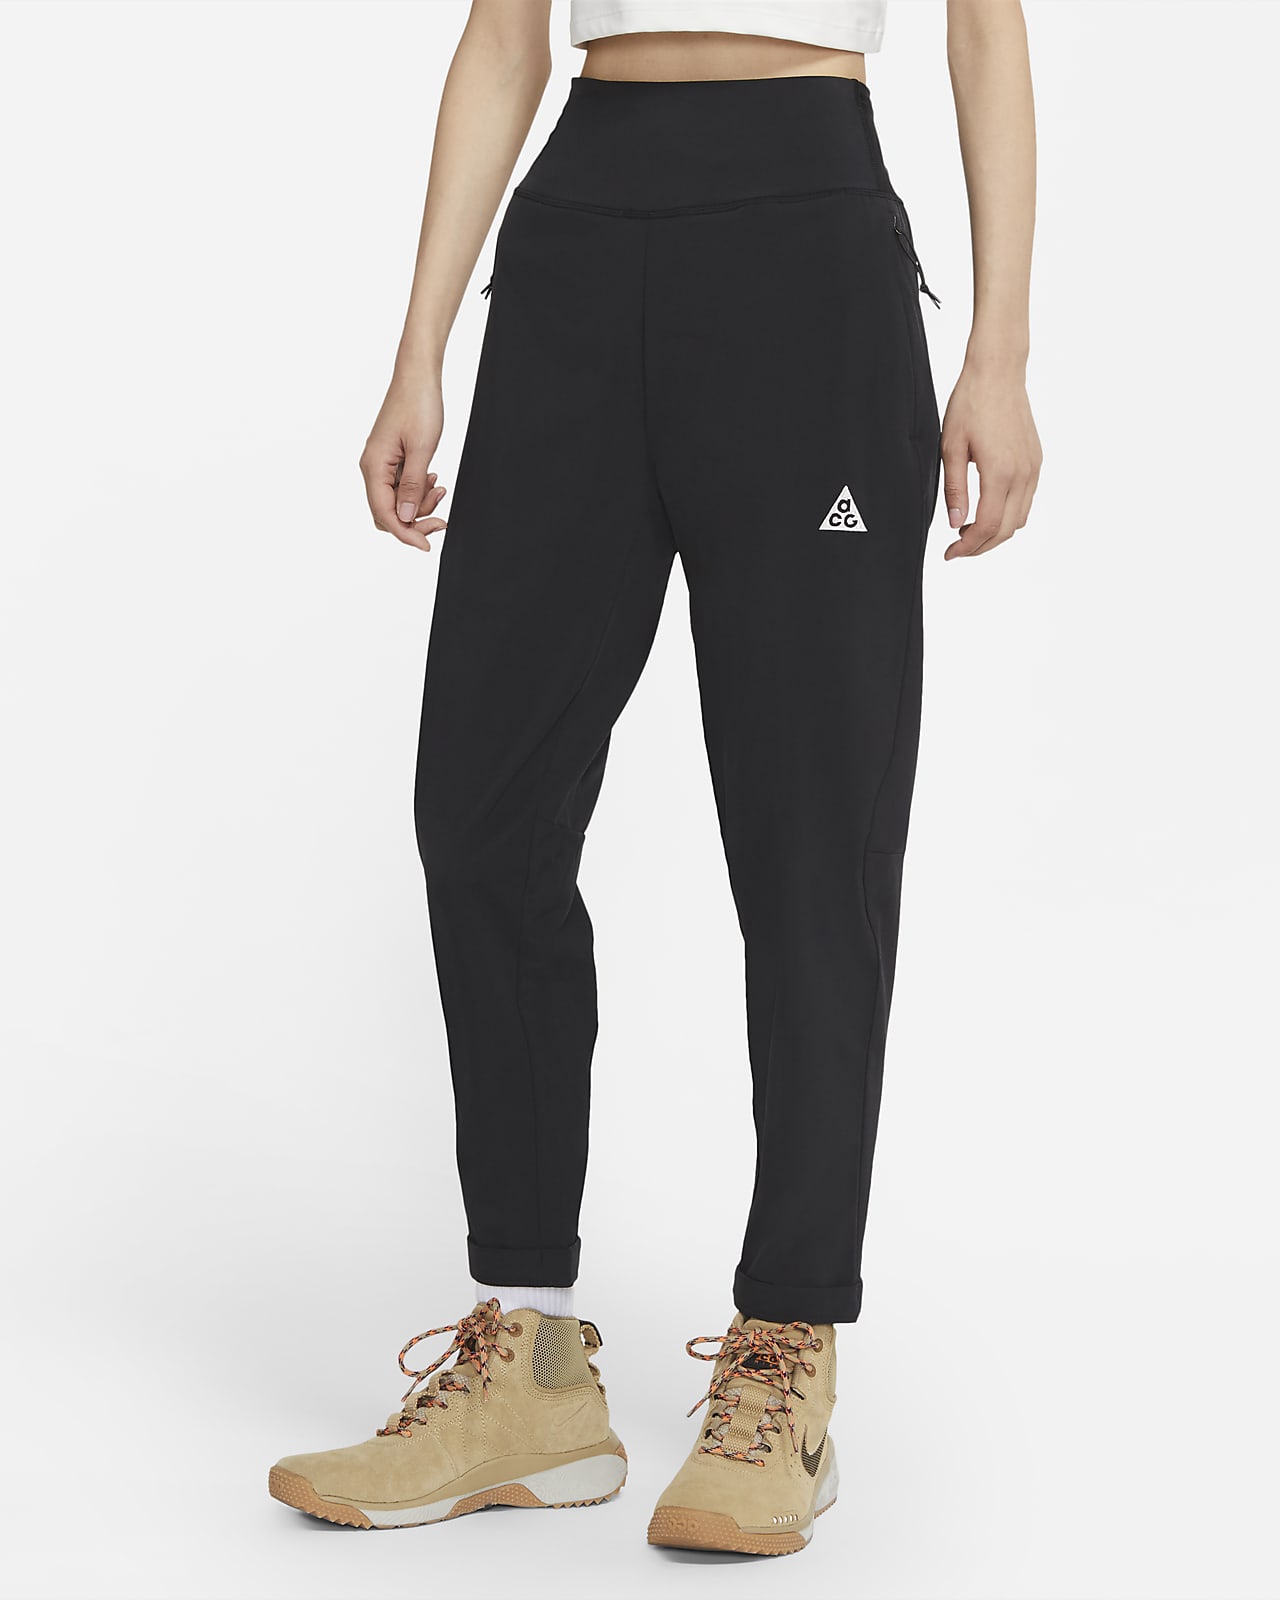 Nike ACG Dri-FIT "New Sands" Women's Trousers